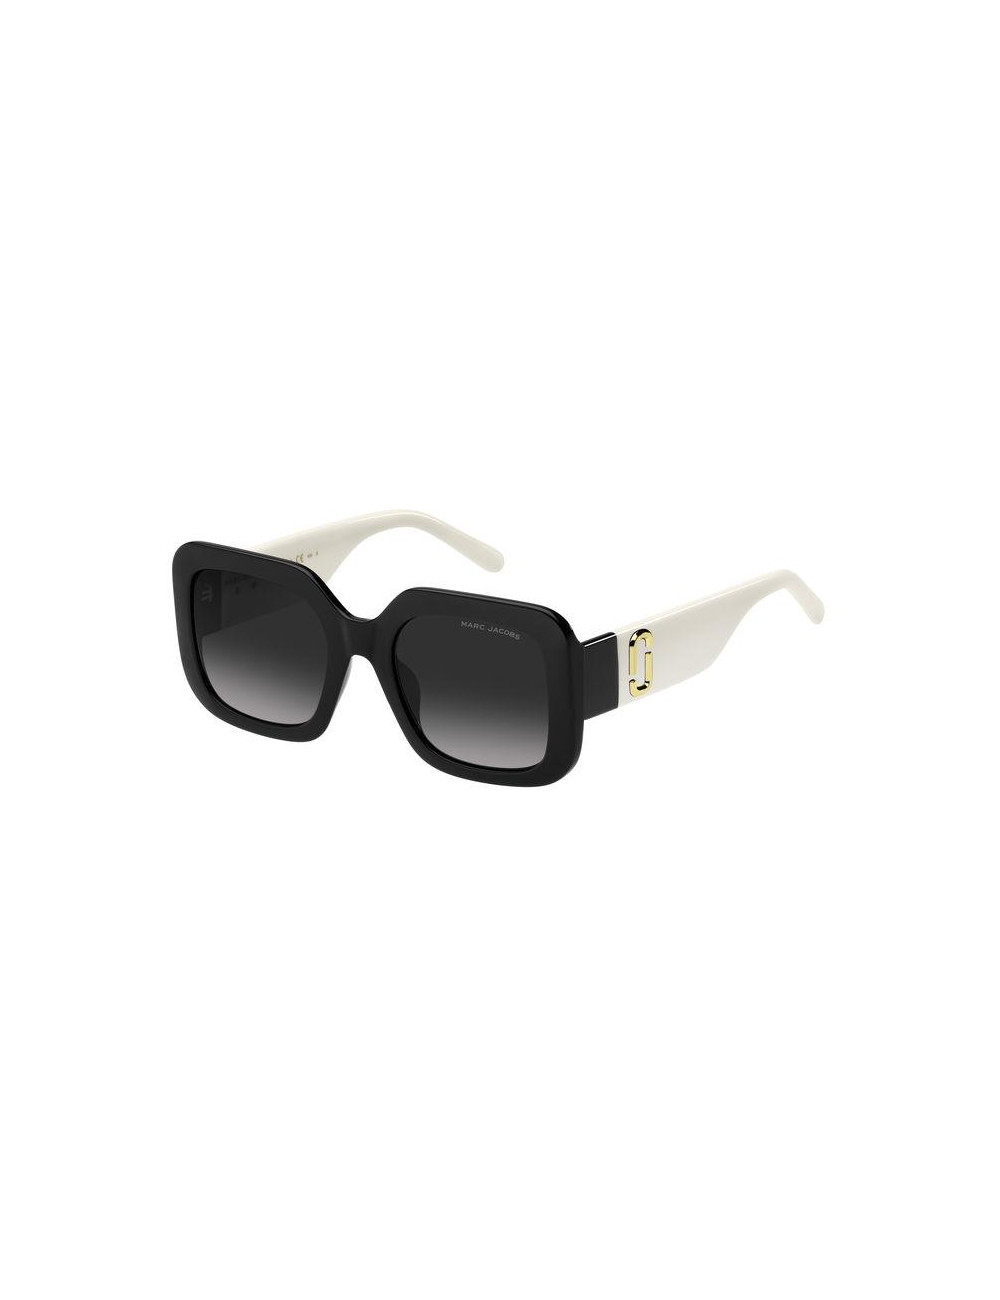 Marc Jacobs Black & White Monogram Sunglasses - ShopStyle